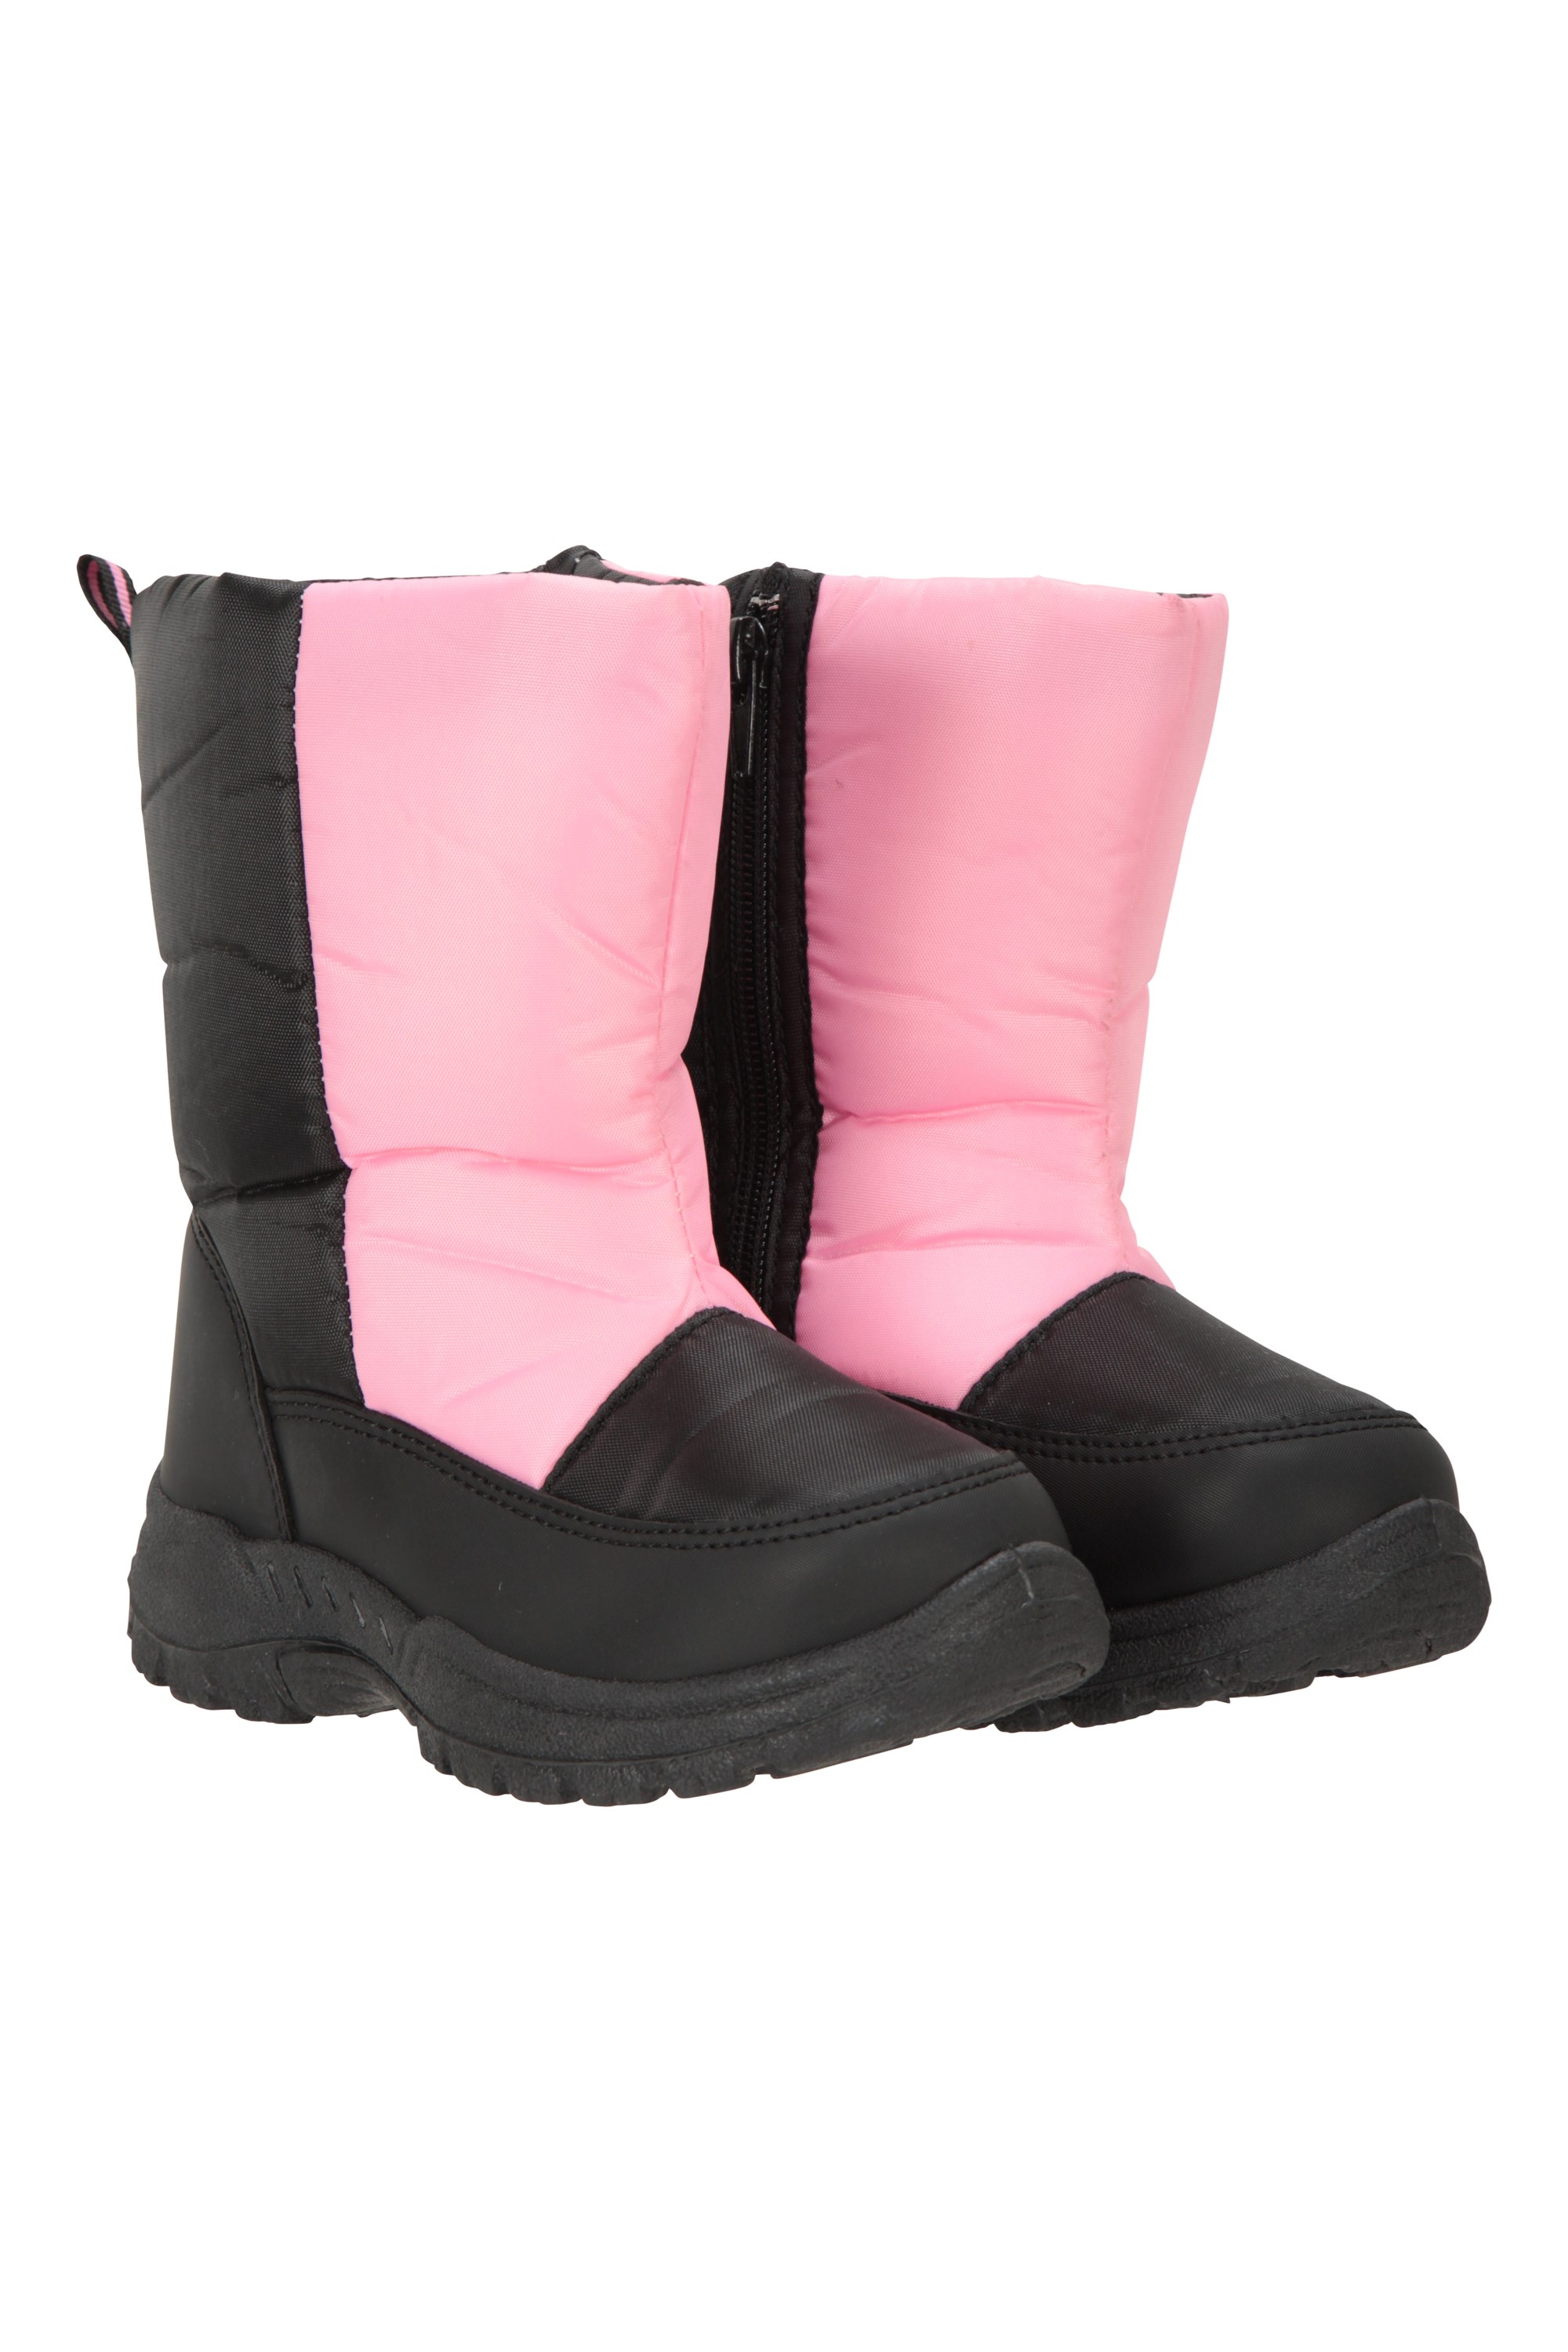 Snowball Toddler Snow Boots - Pink